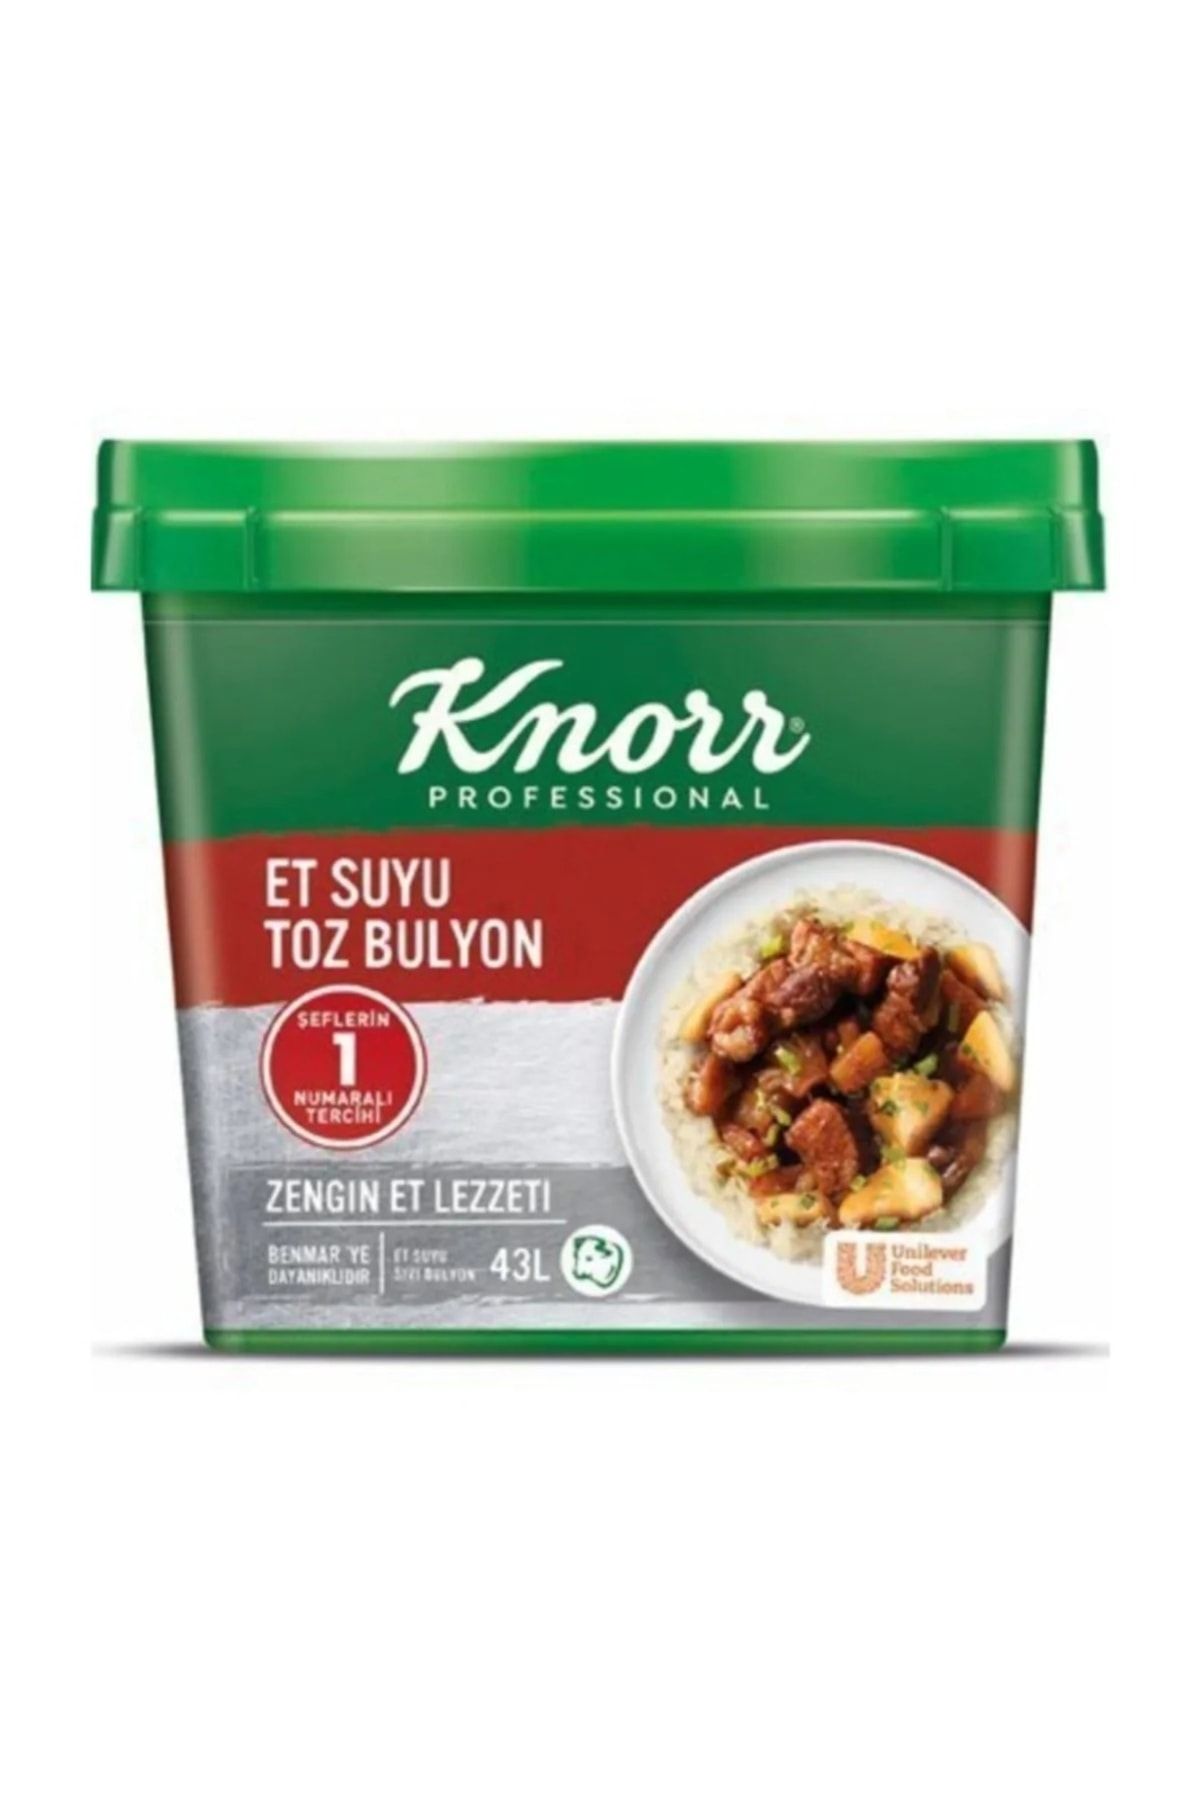 Knorr Et Suyu Toz Bulyon 750 G X 6 Adet (koli)